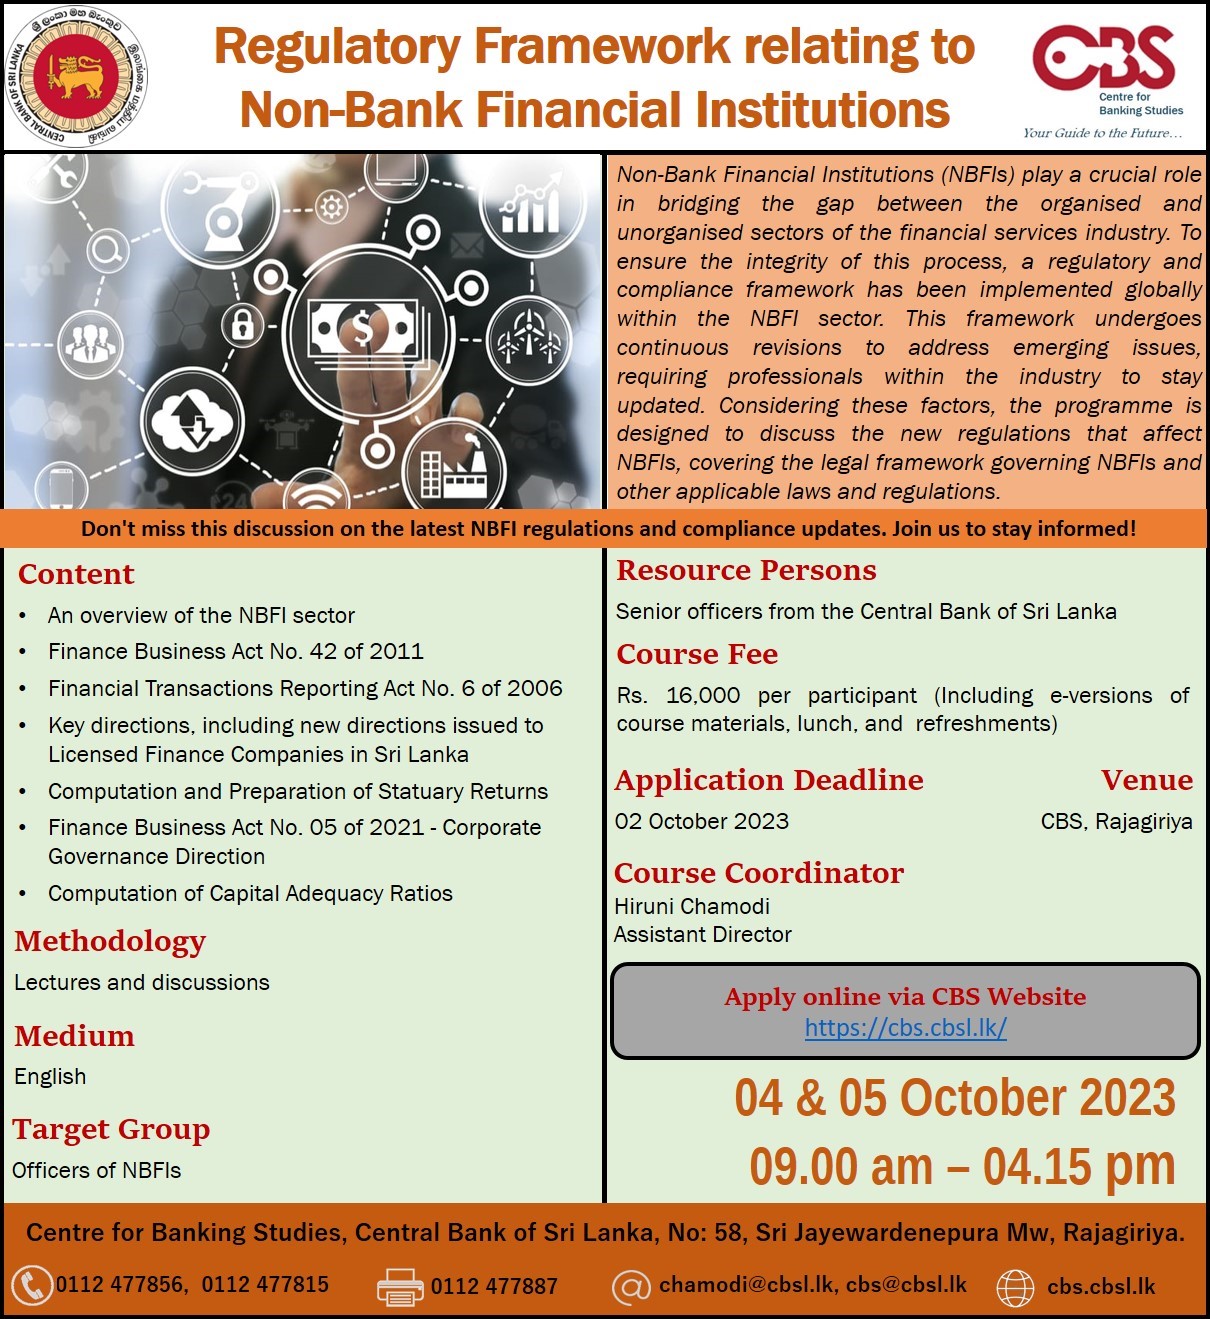 Regulatory Framework Relating to Non-Bank Financial Institutions 2023